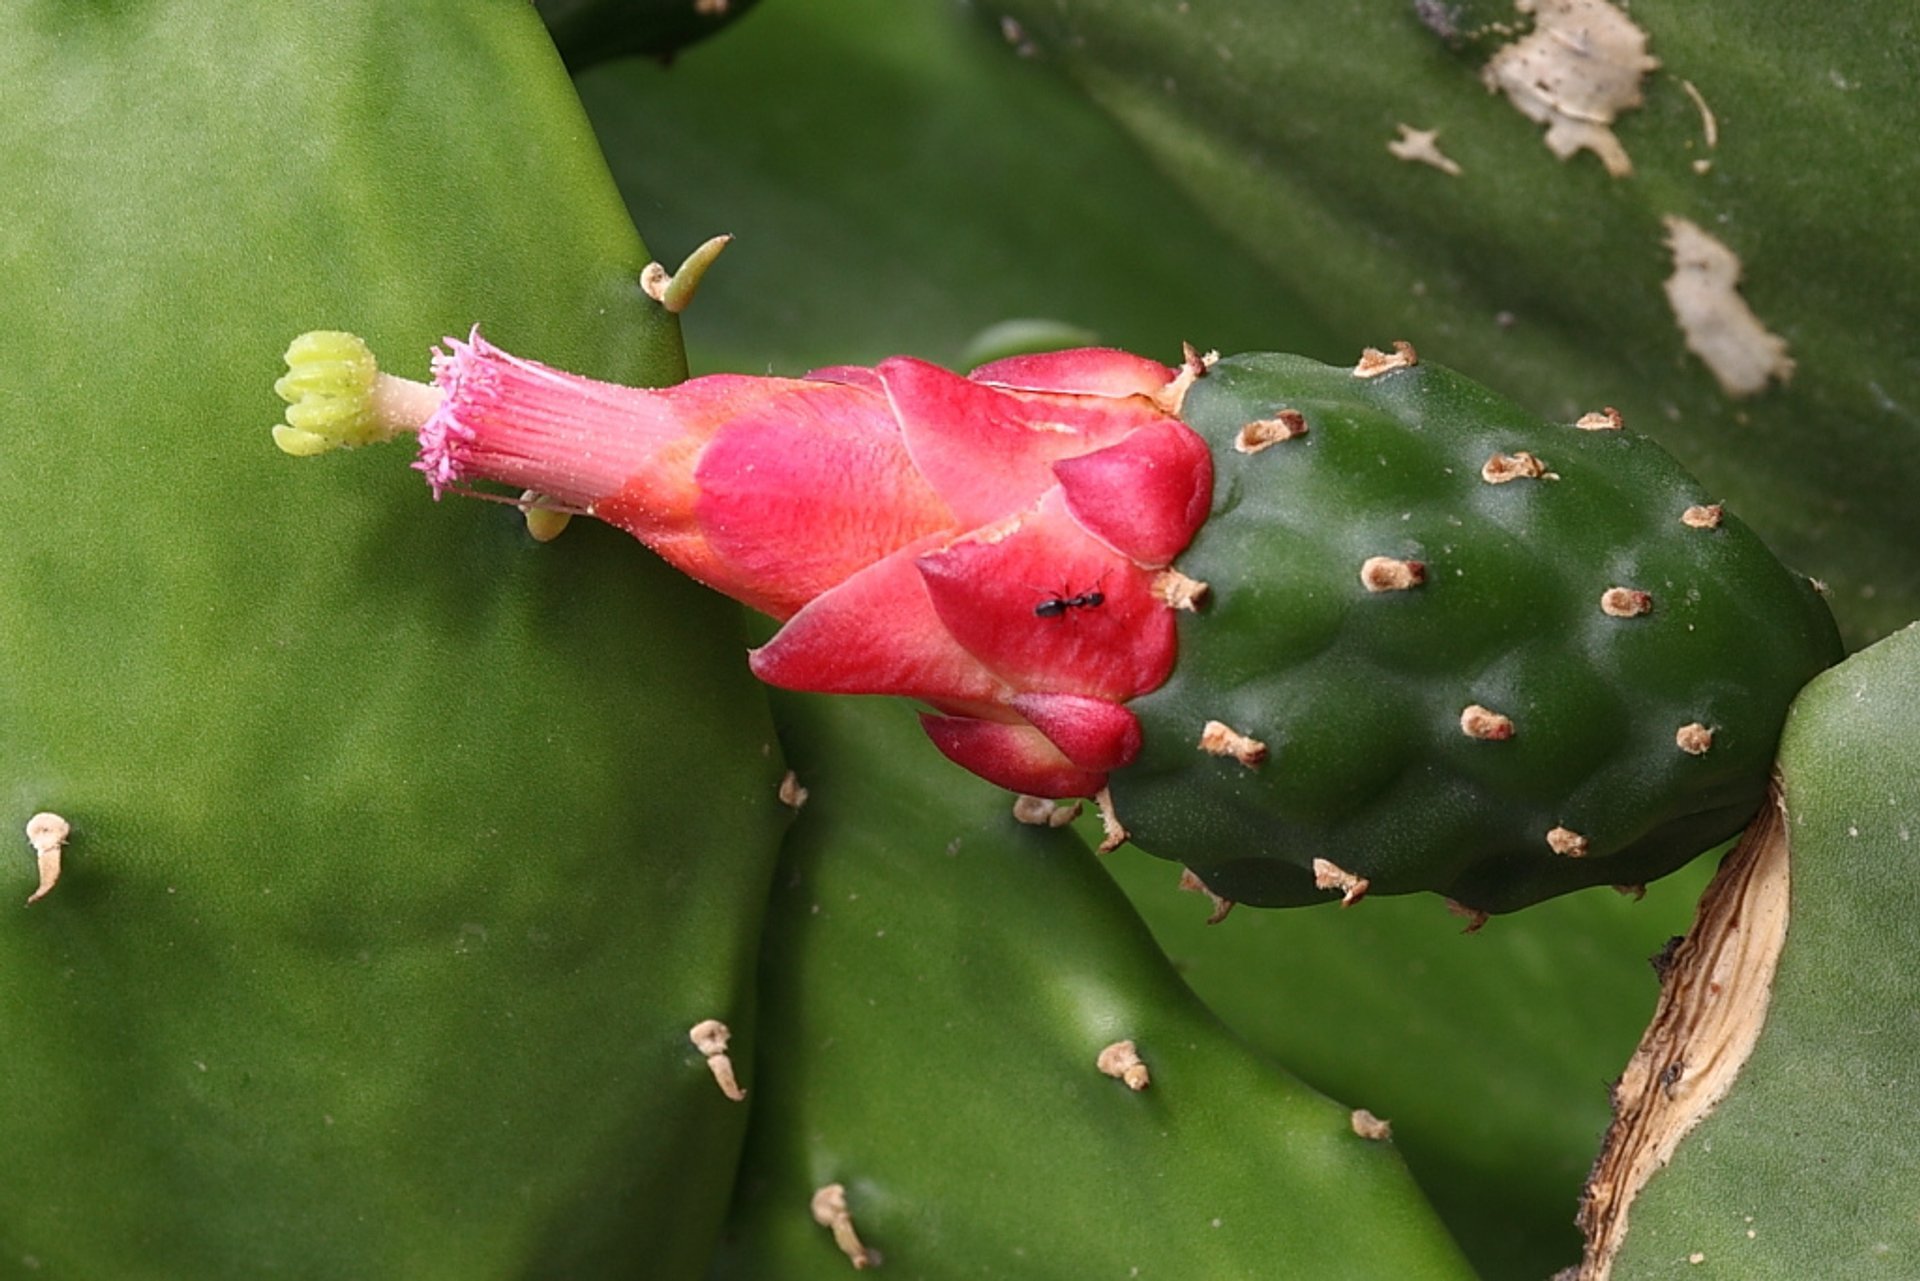 Cactus Fleurs Saison Blooming